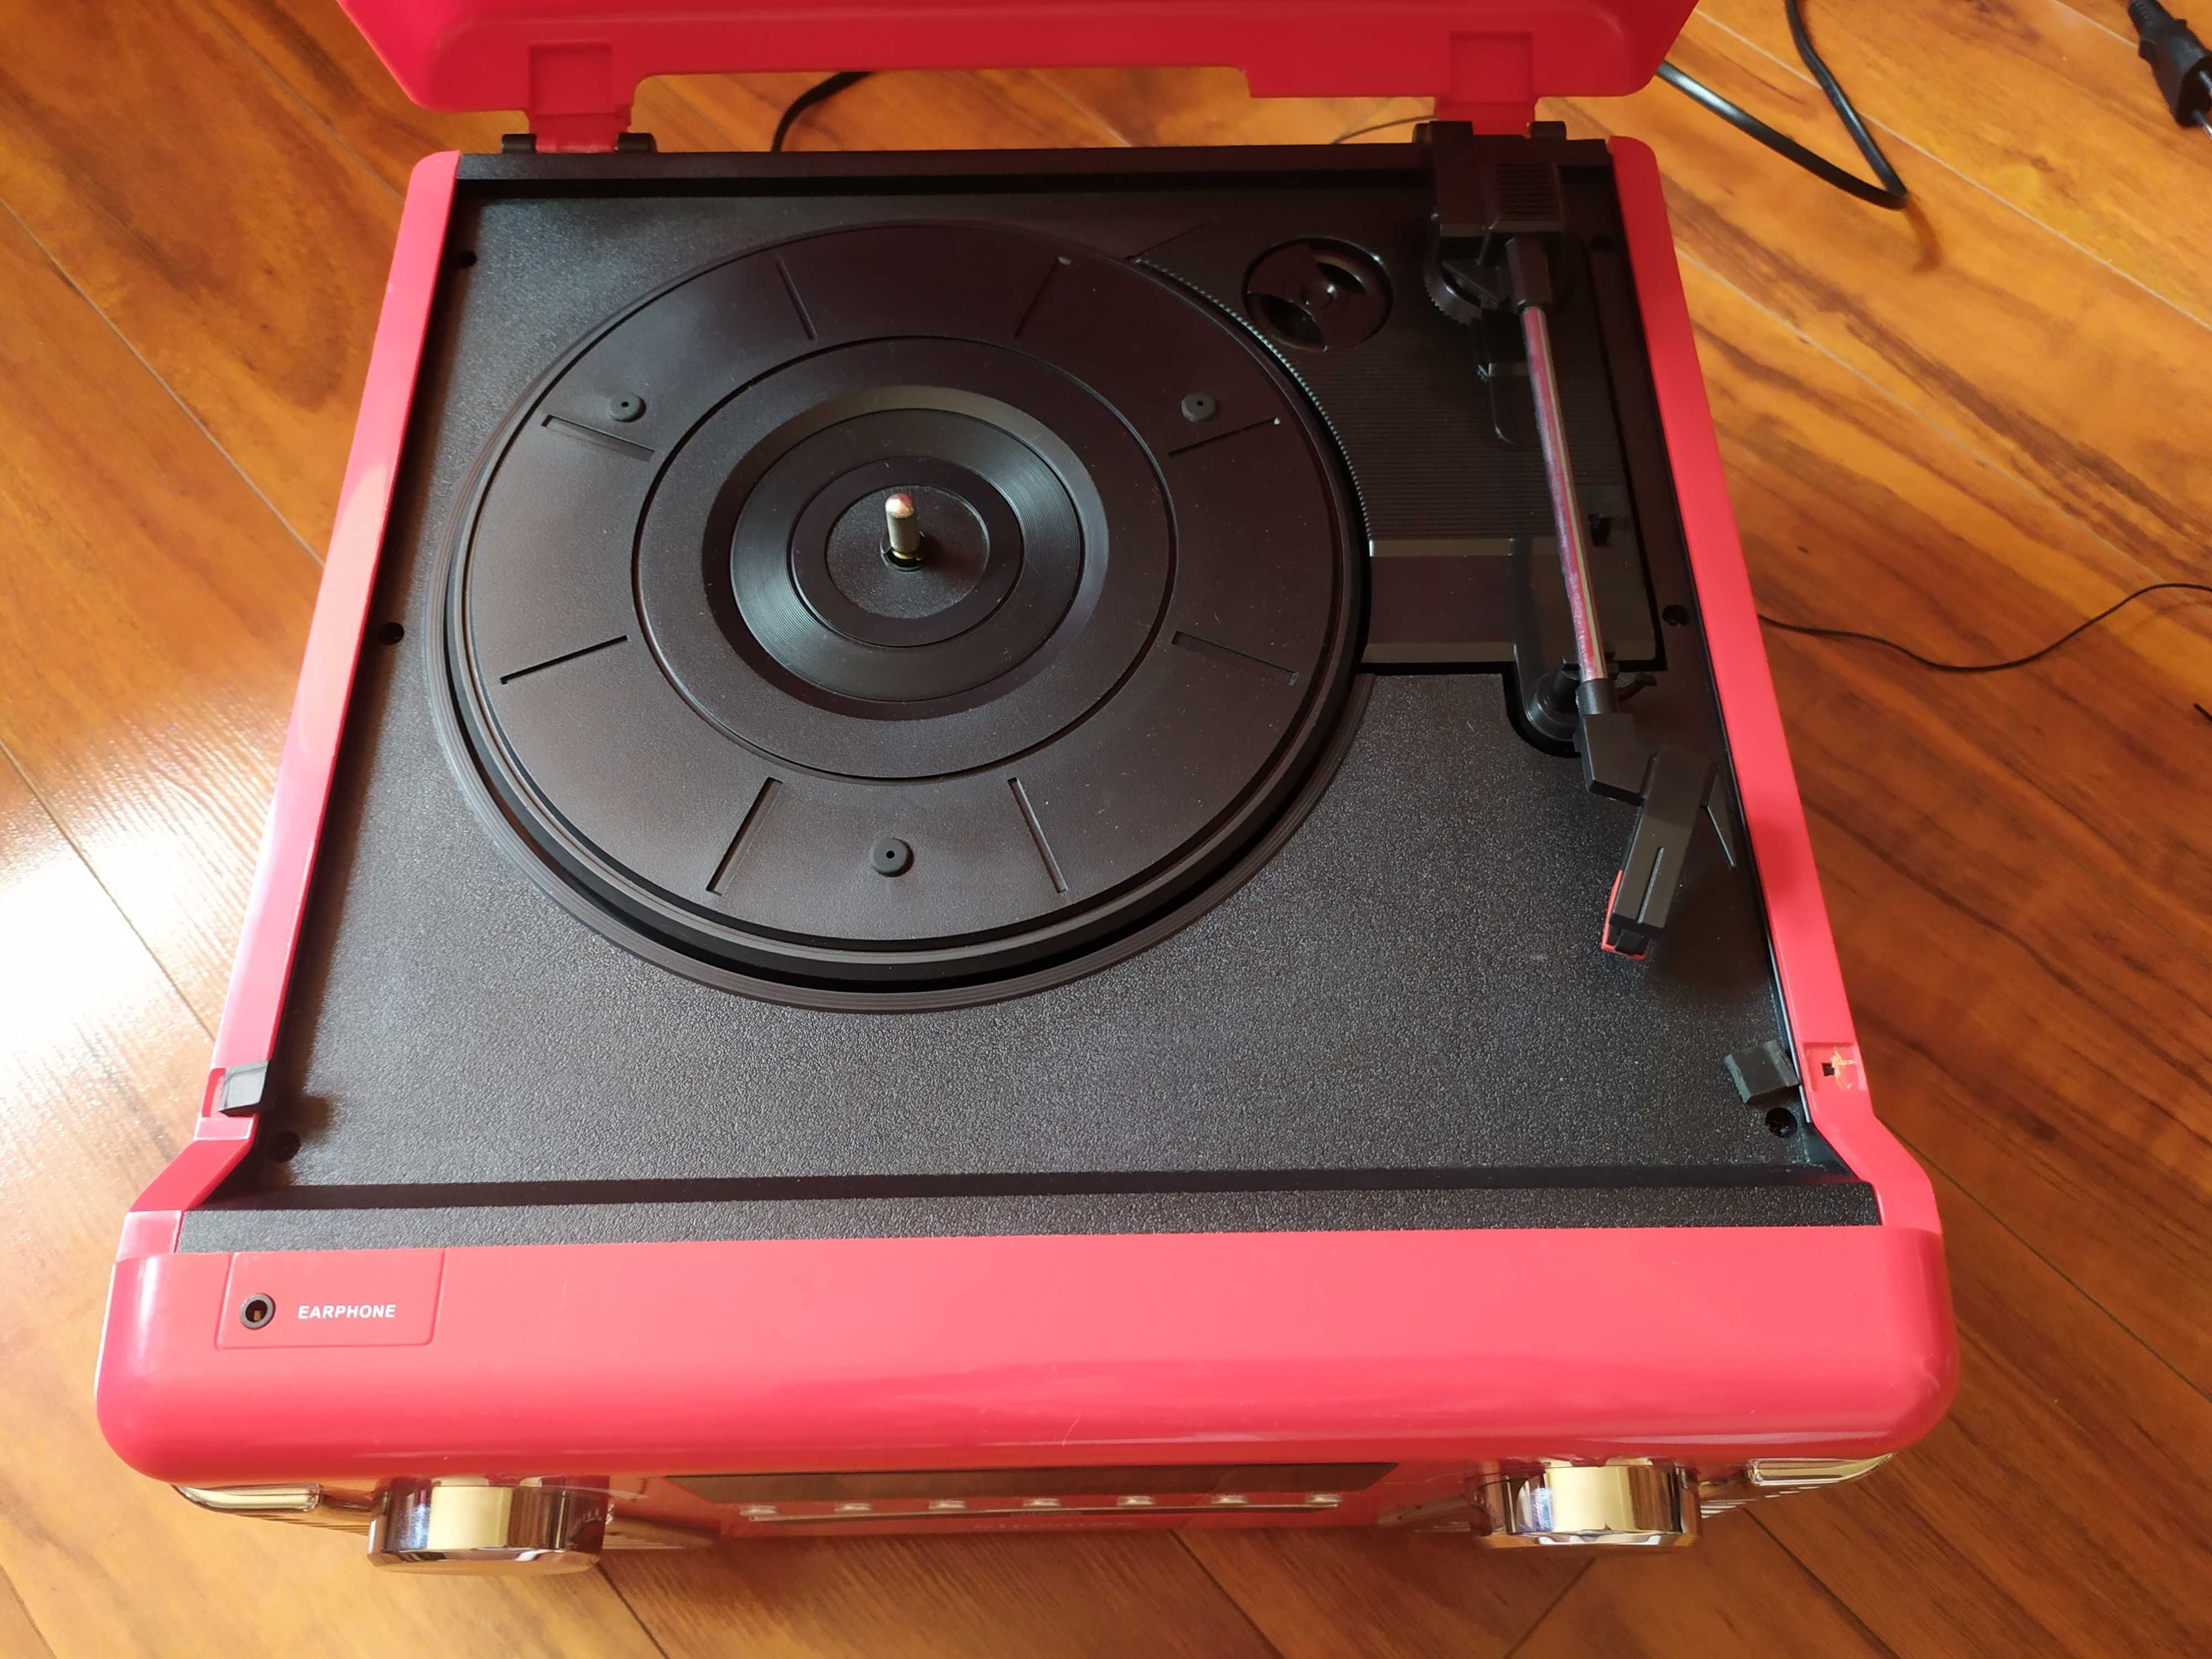 Gramofon Chronox E-6060 Retro Stereoanlage Red